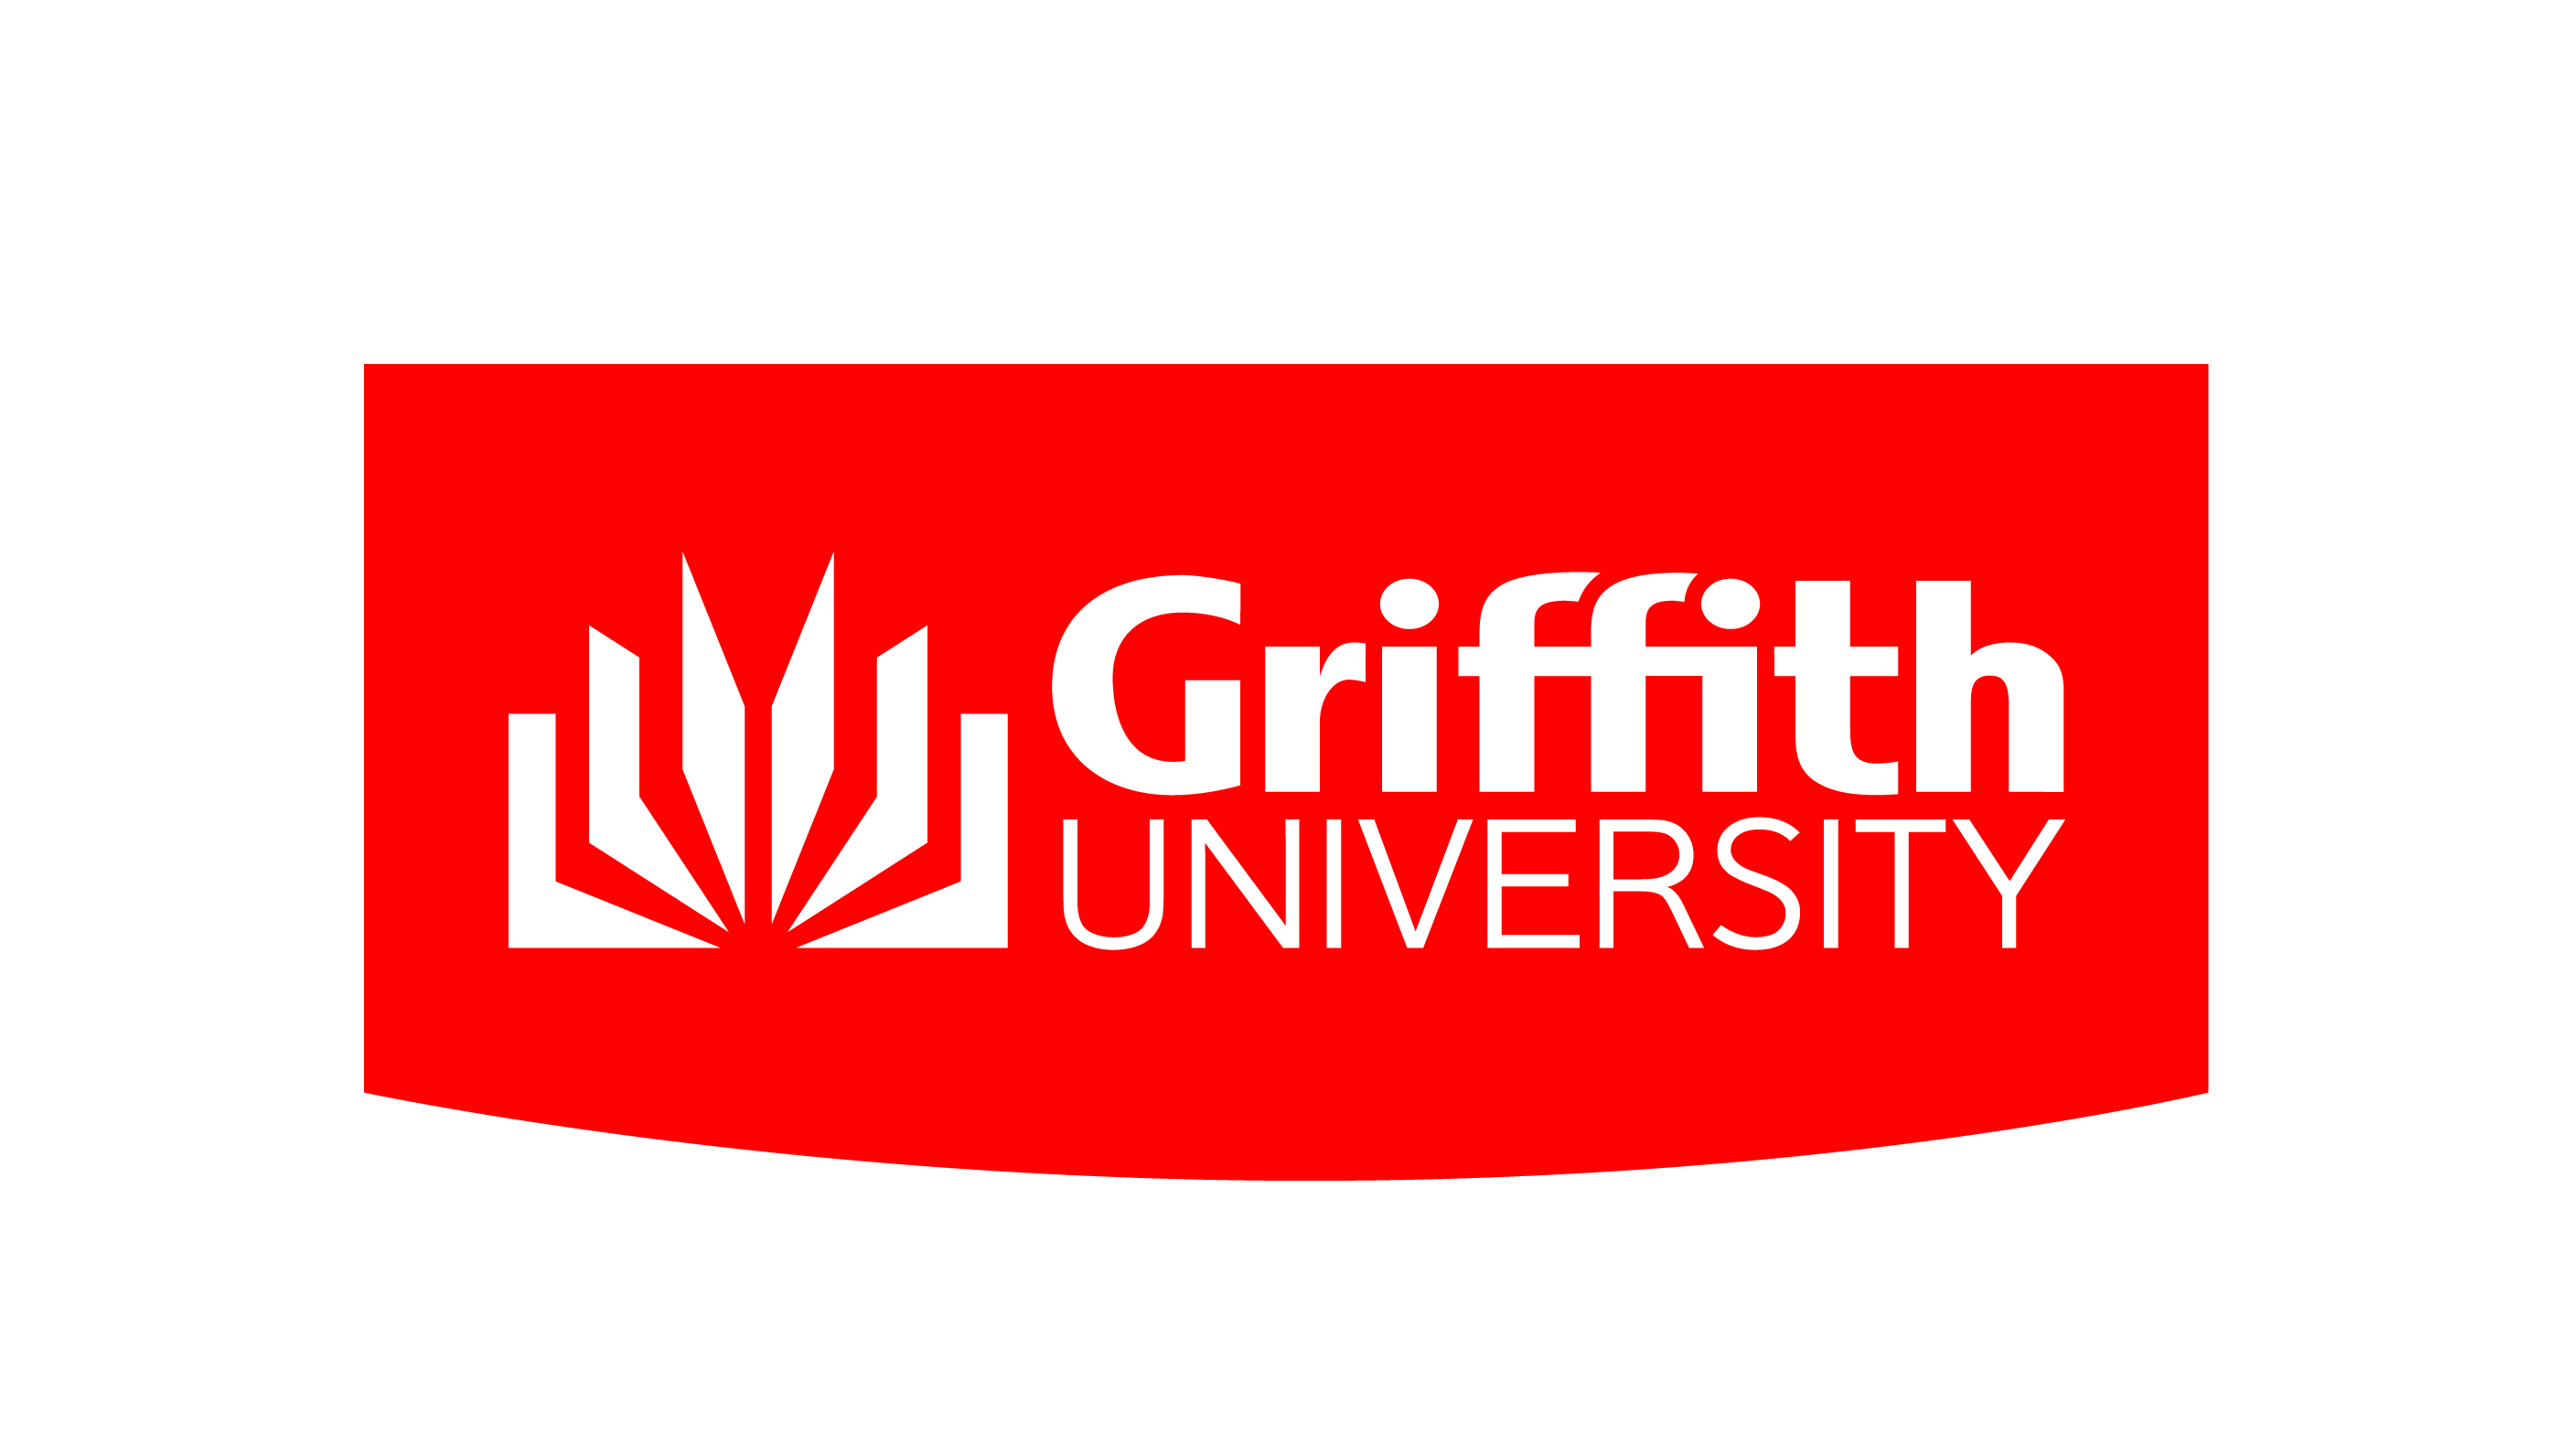 Griffith University Logo